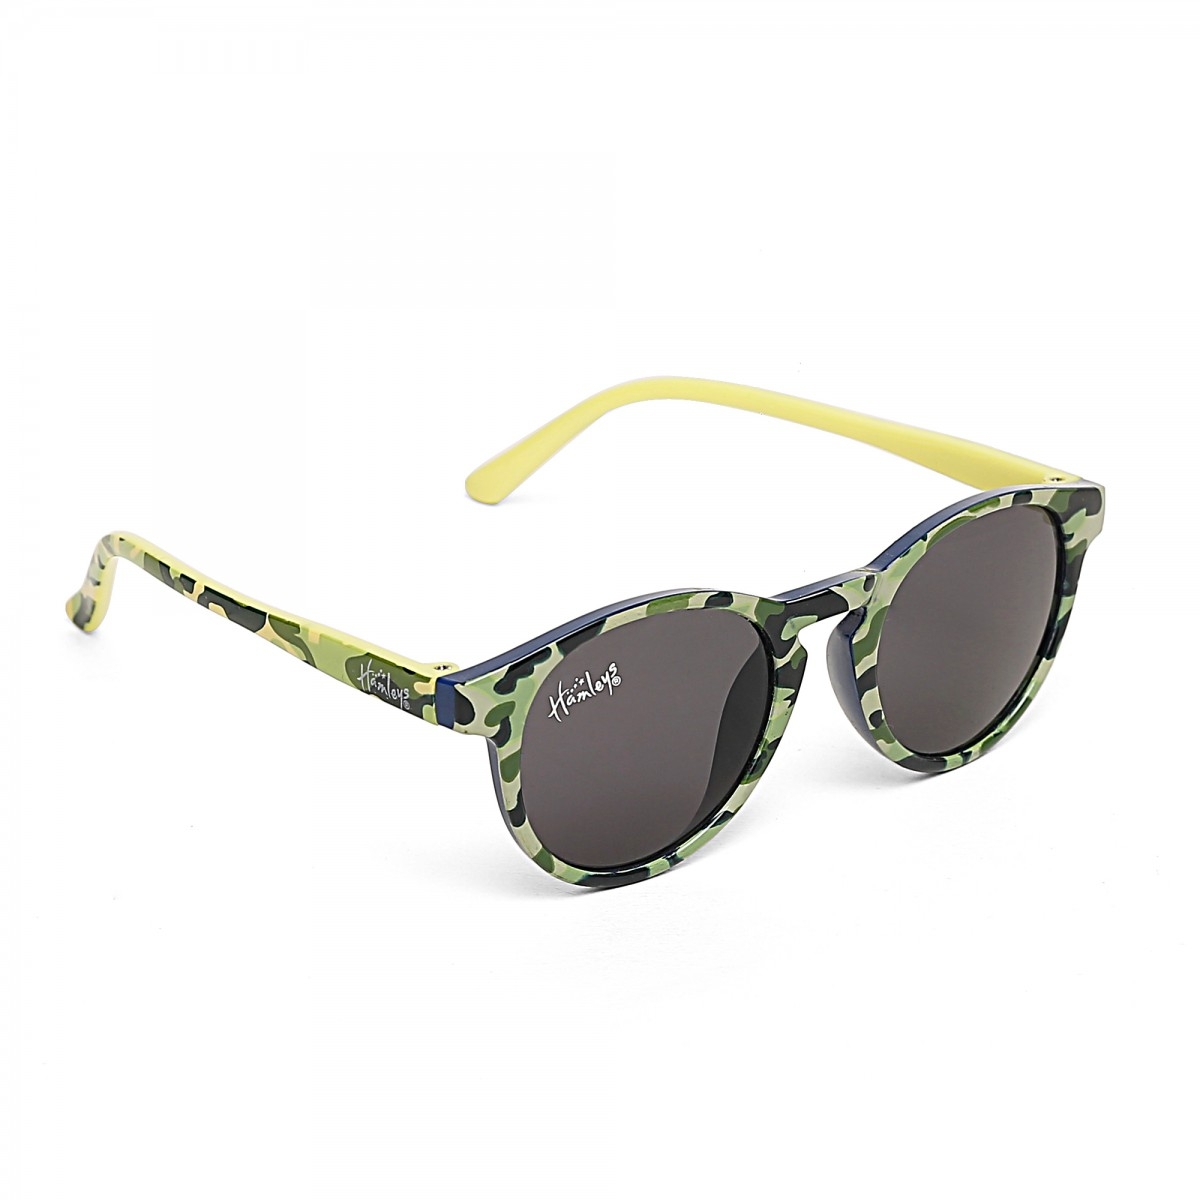 Hamleys Sunglasses for Kids Camoflouge, 3Y+